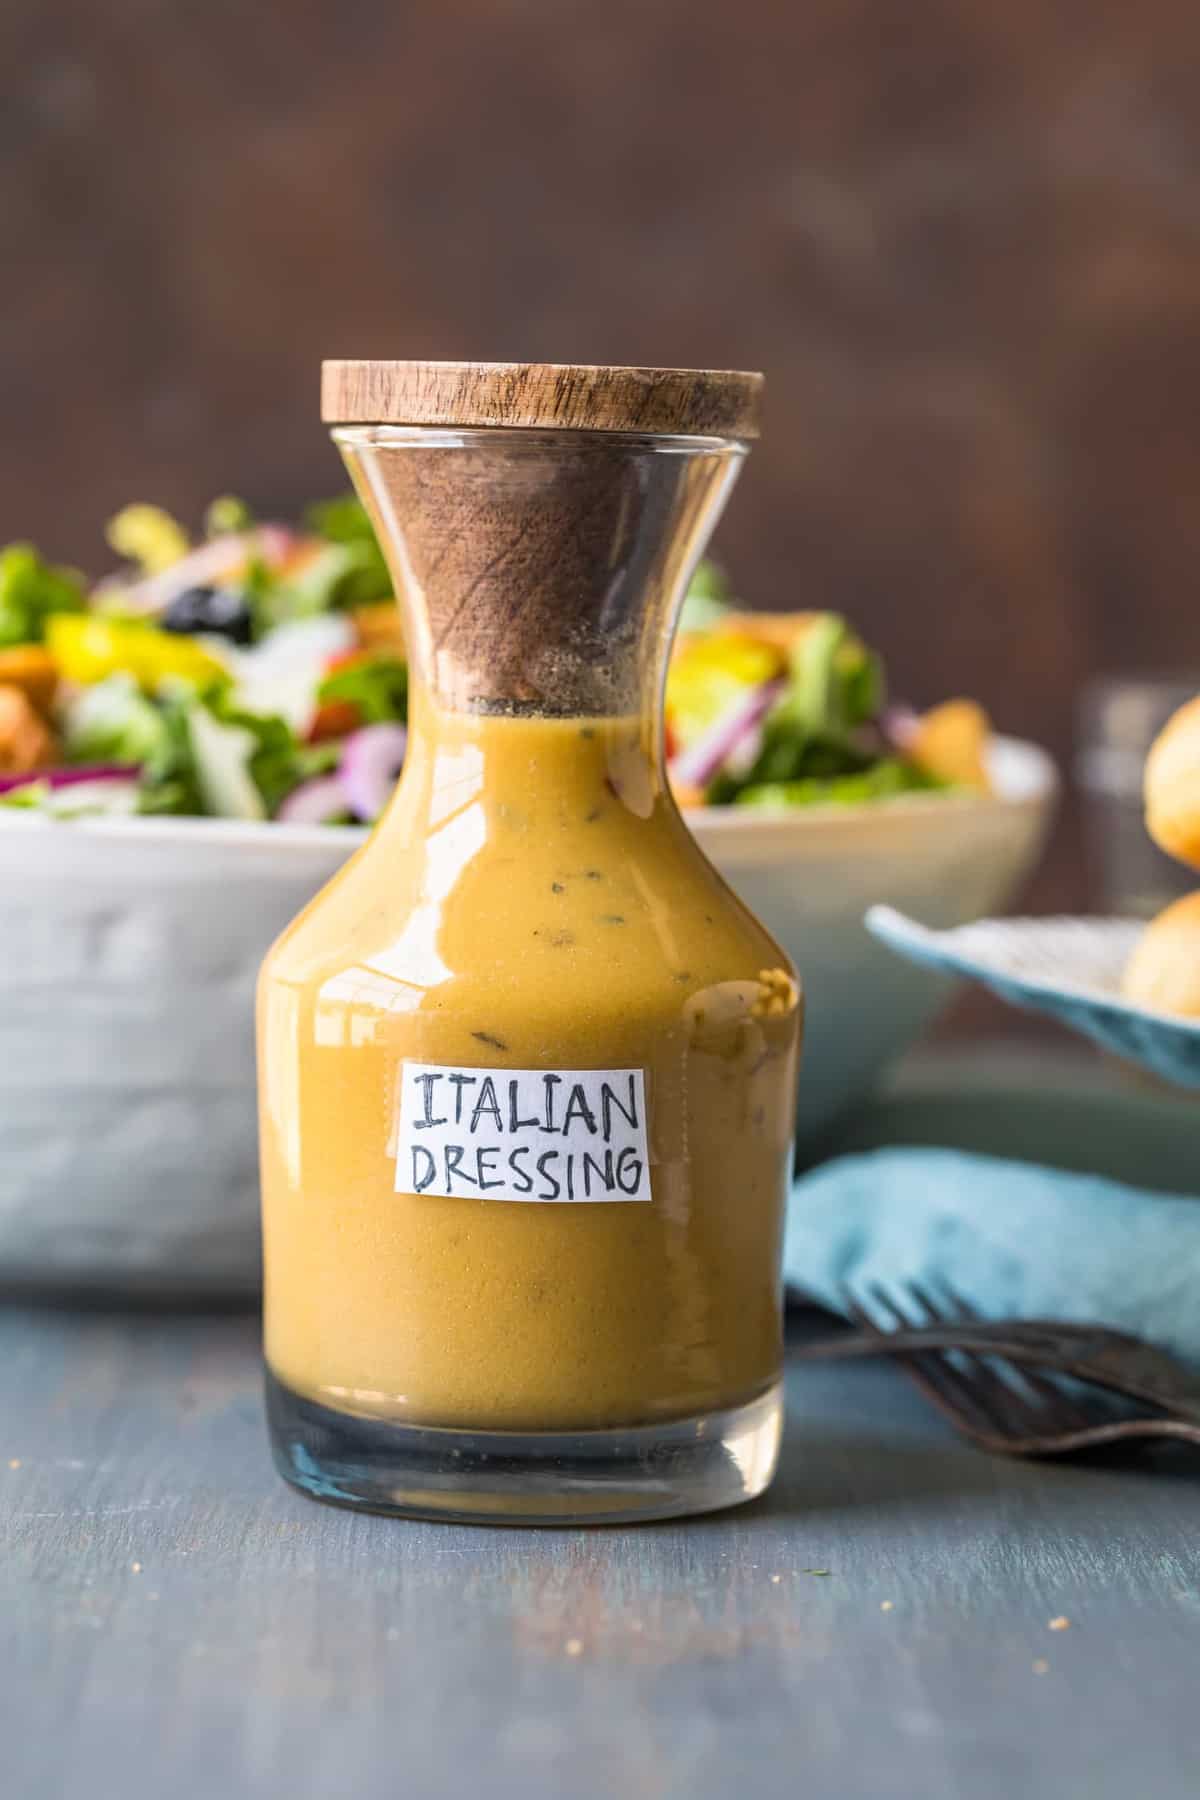 Italian dressing in a labelled glass jar